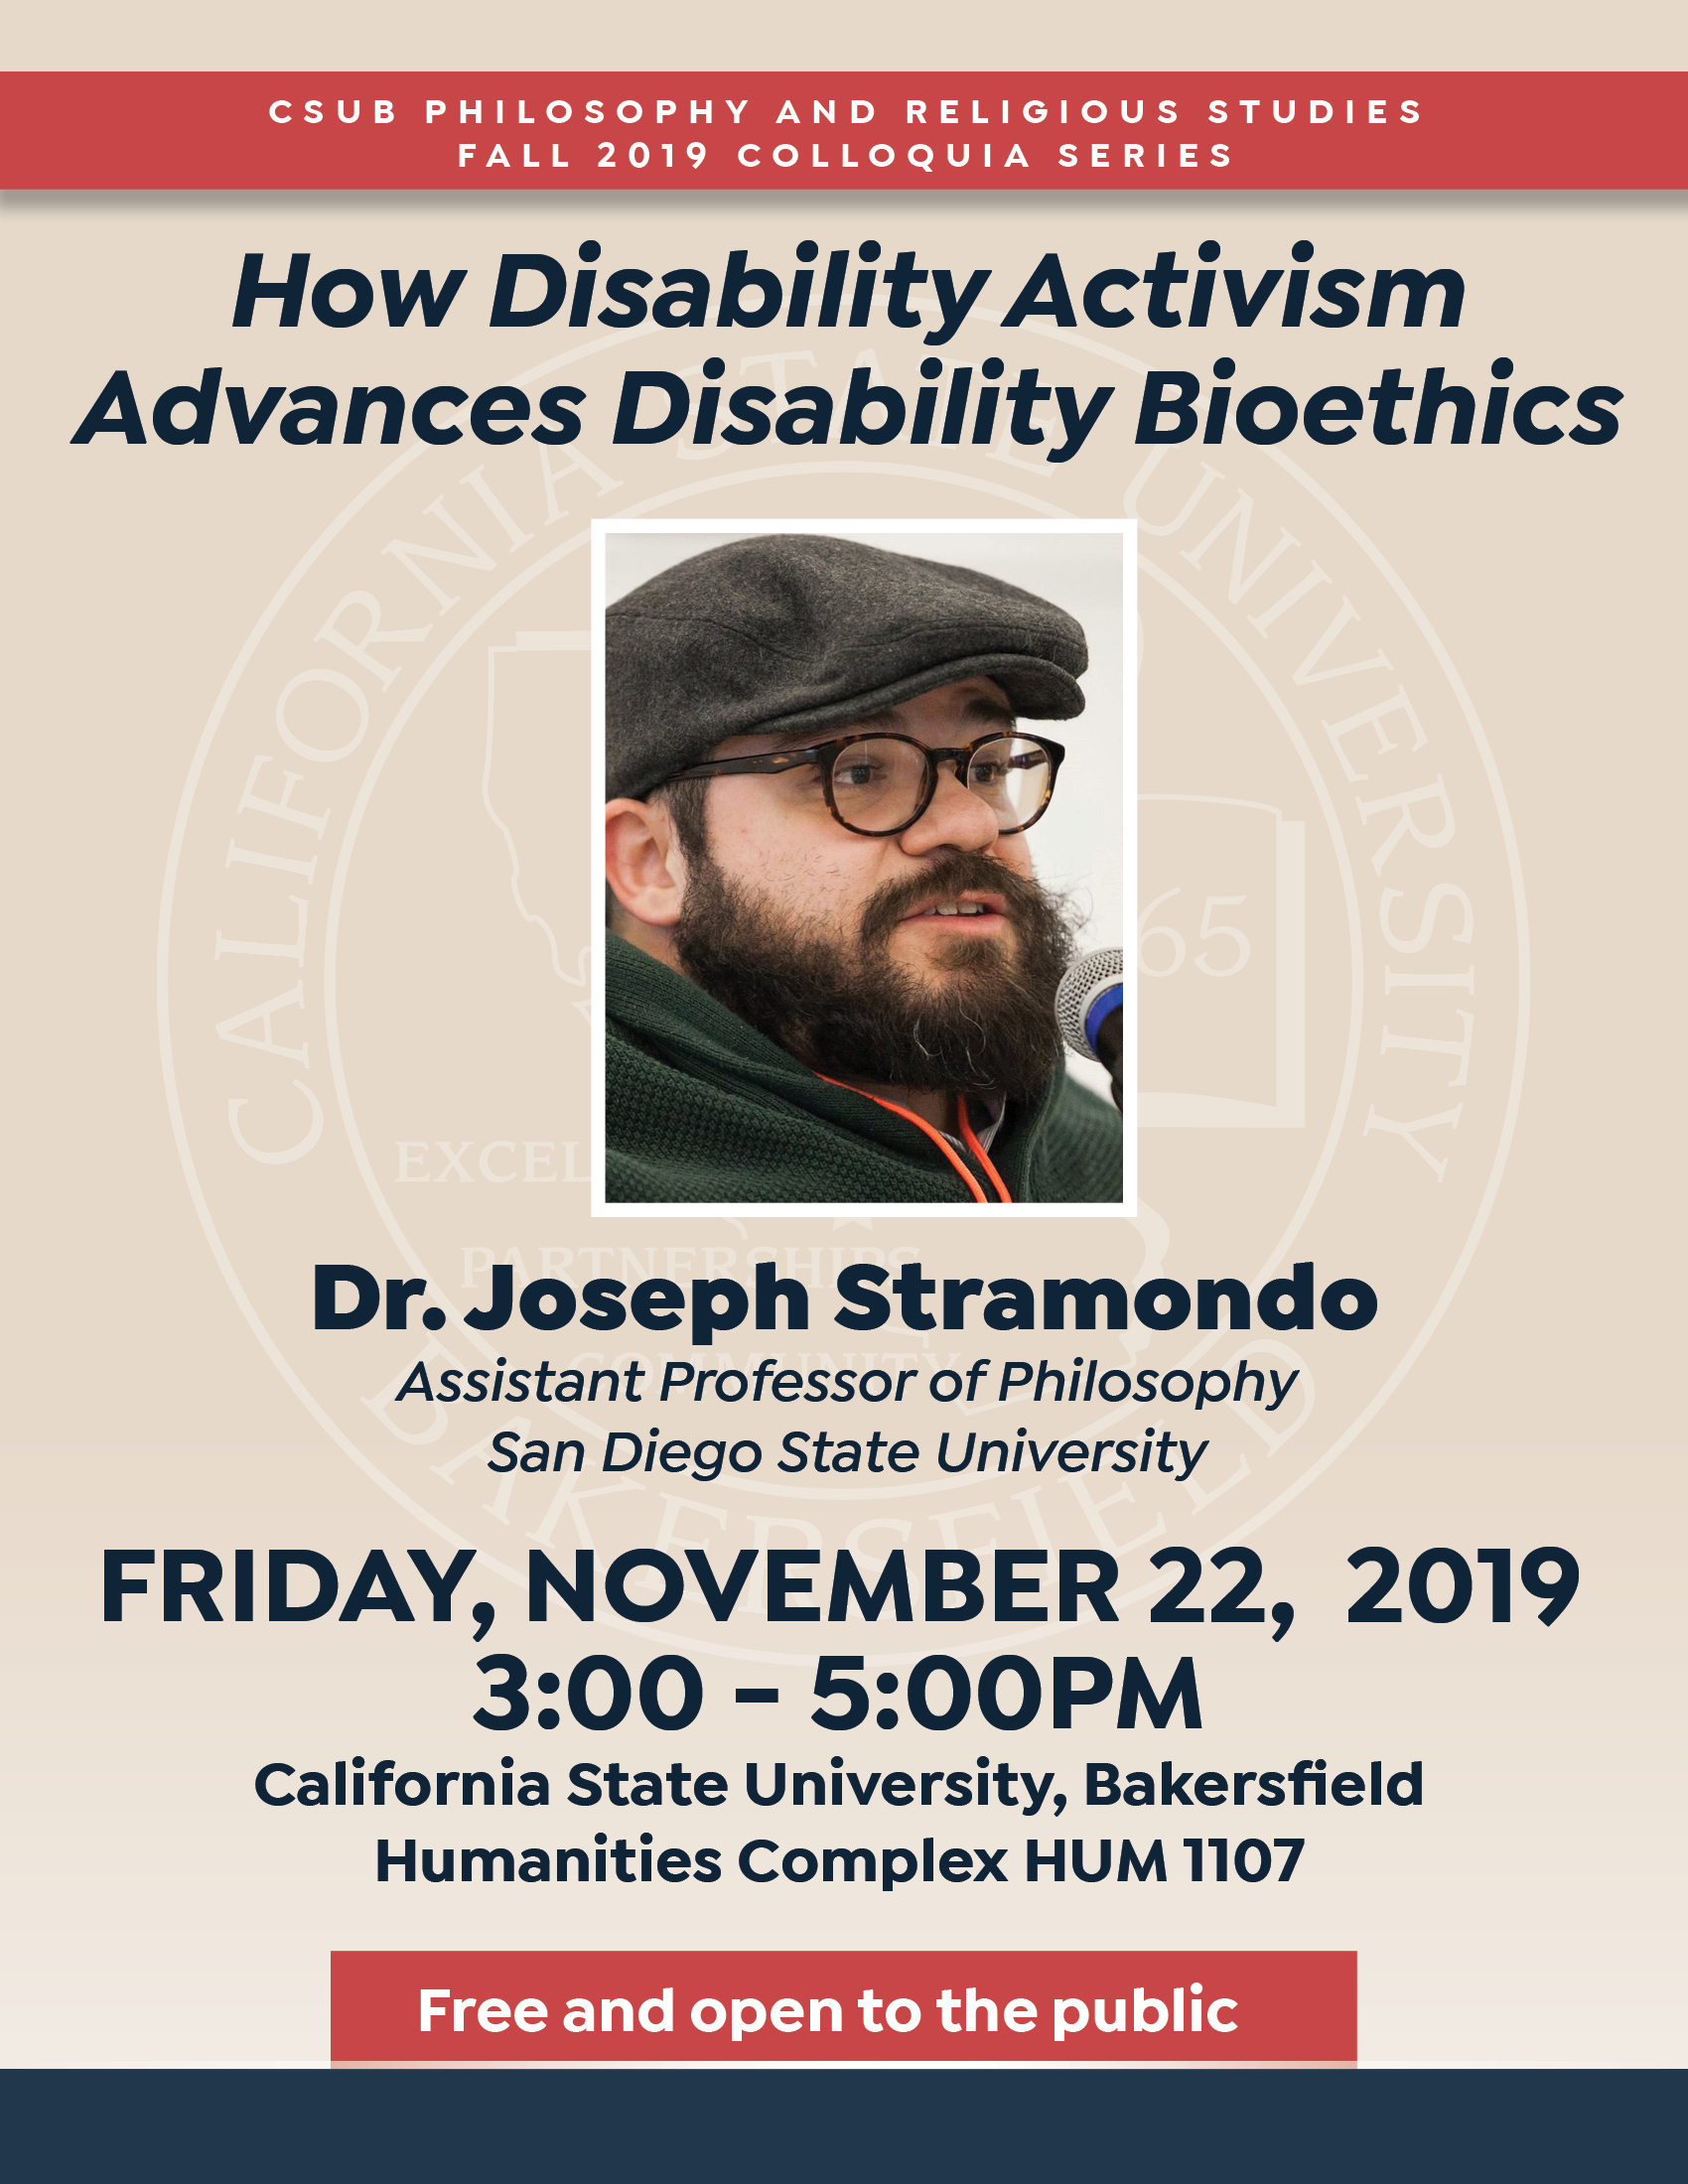 How Disability Activism Advances Disability Bioethics flyer